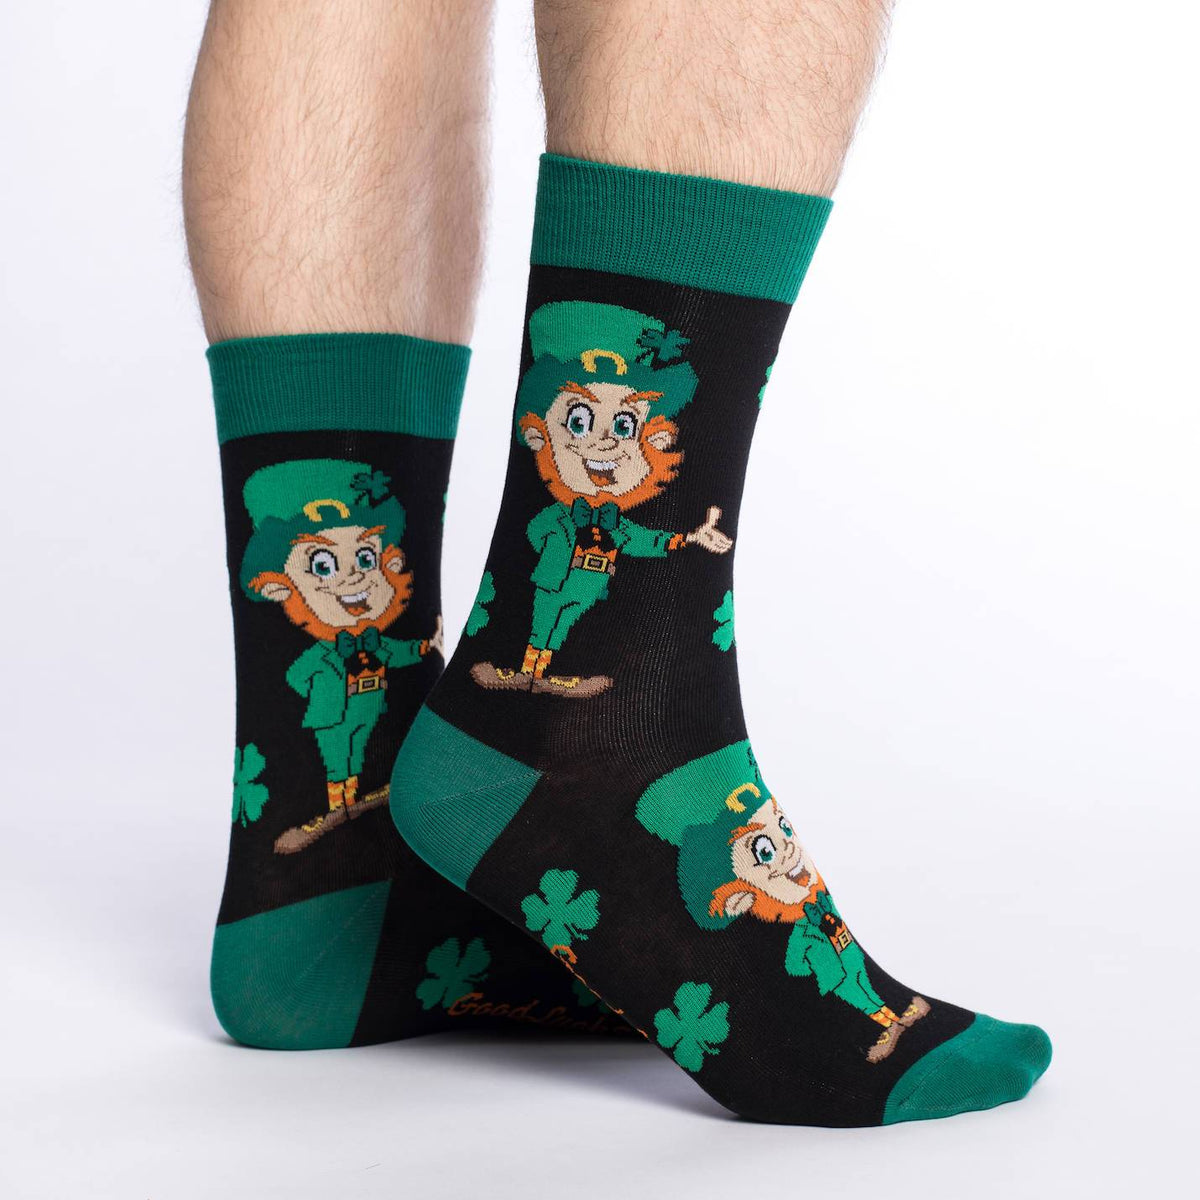 Men's Leprechaun Socks